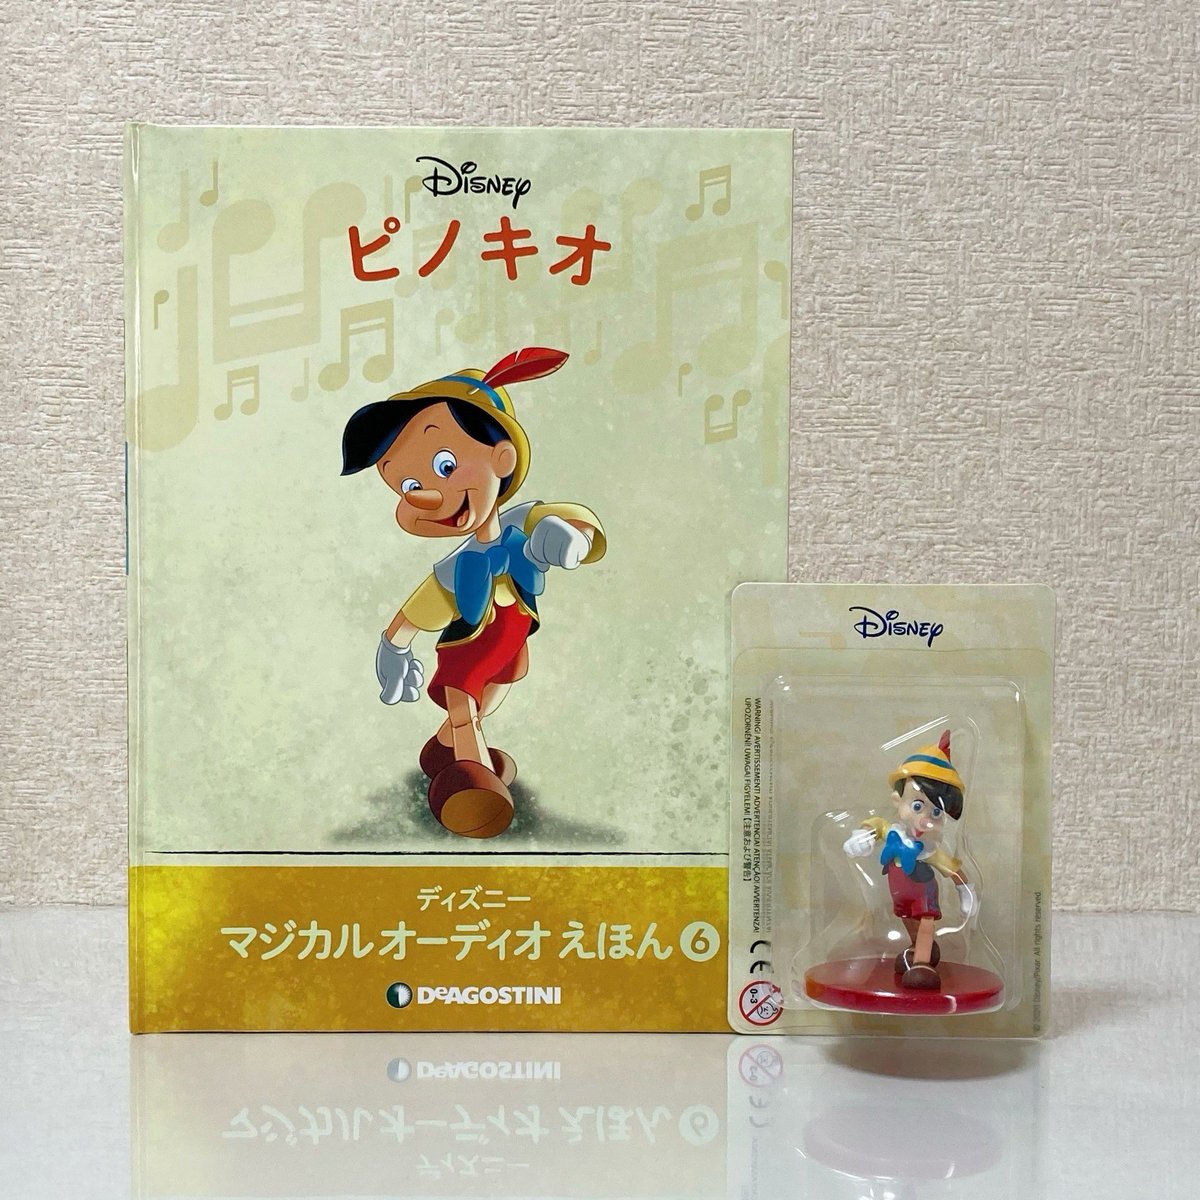 Hiro No Twitter デアゴスティーニ ディズニーマジカルオーディオえほん 6号は ピノキオ ピノキオのフィギュアは顔がもう少し上を向いていて欲しかったなあ ピノキオのストーリーってあまりはっきり覚えてないから楽しみ ディズニーえほんキャンペーン